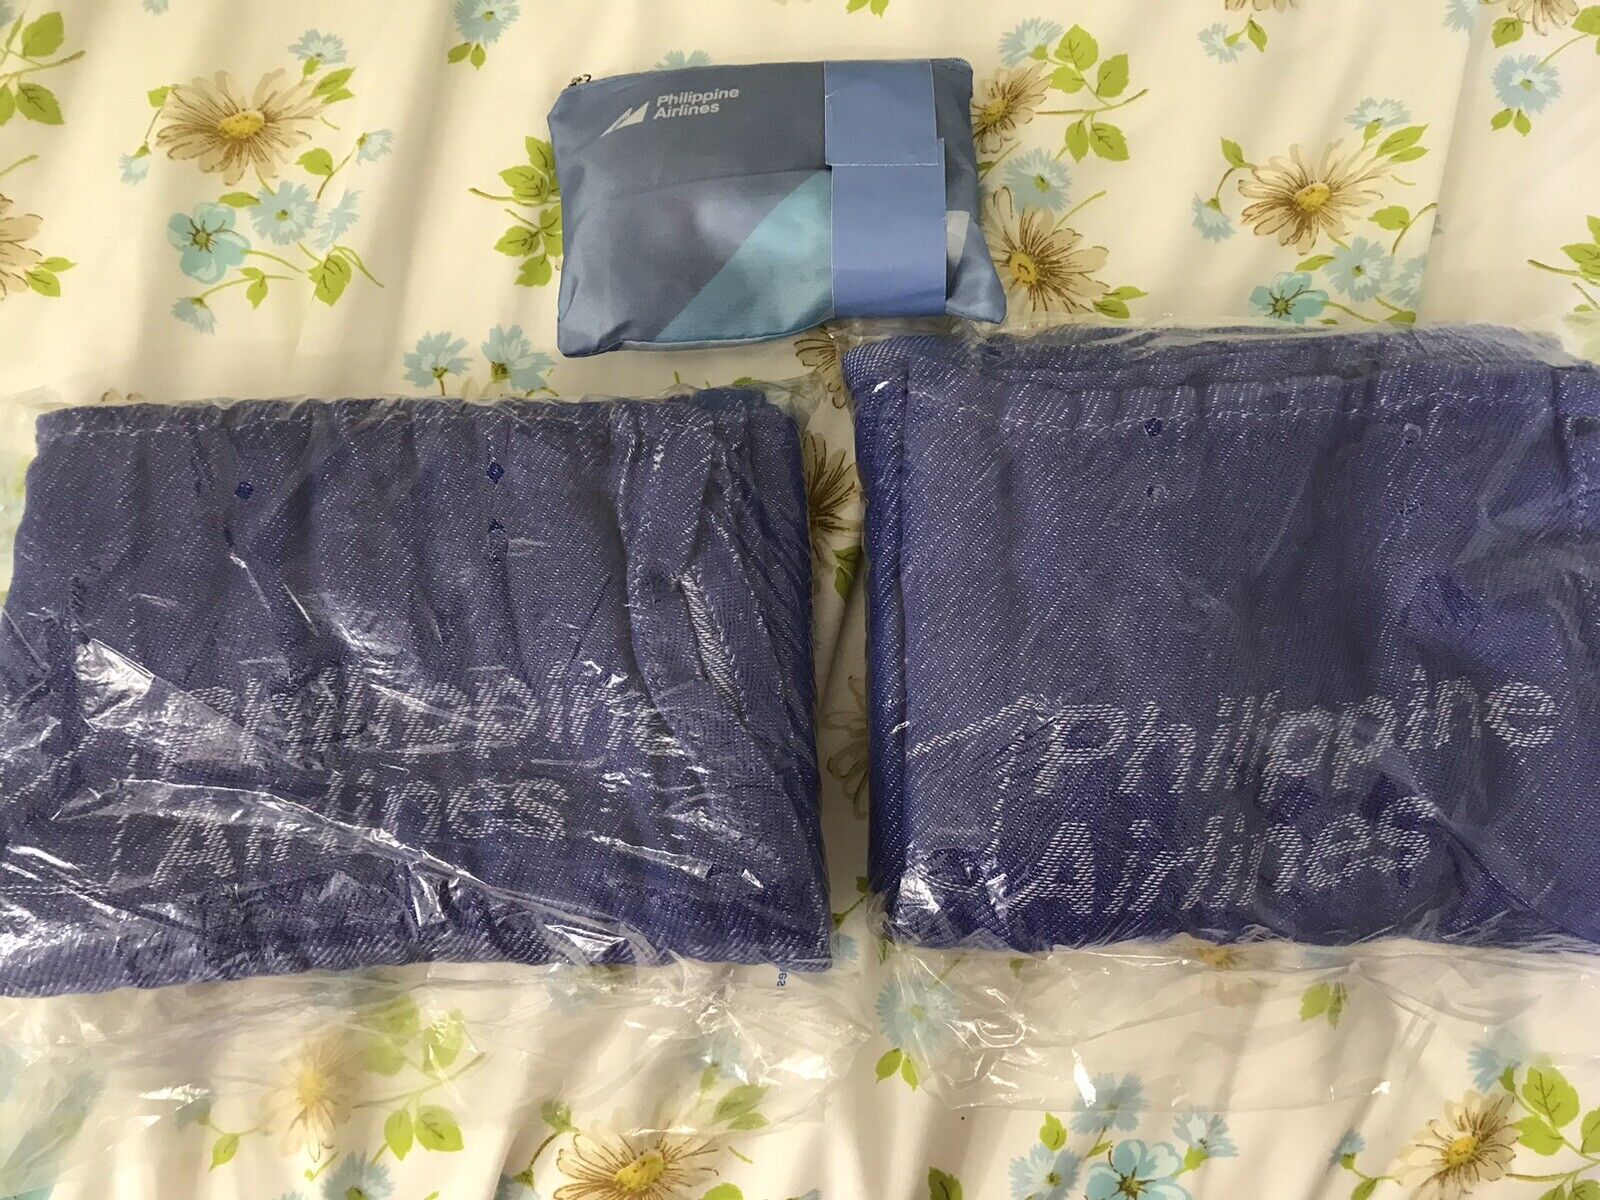 Philippine Airlines Travel Kit